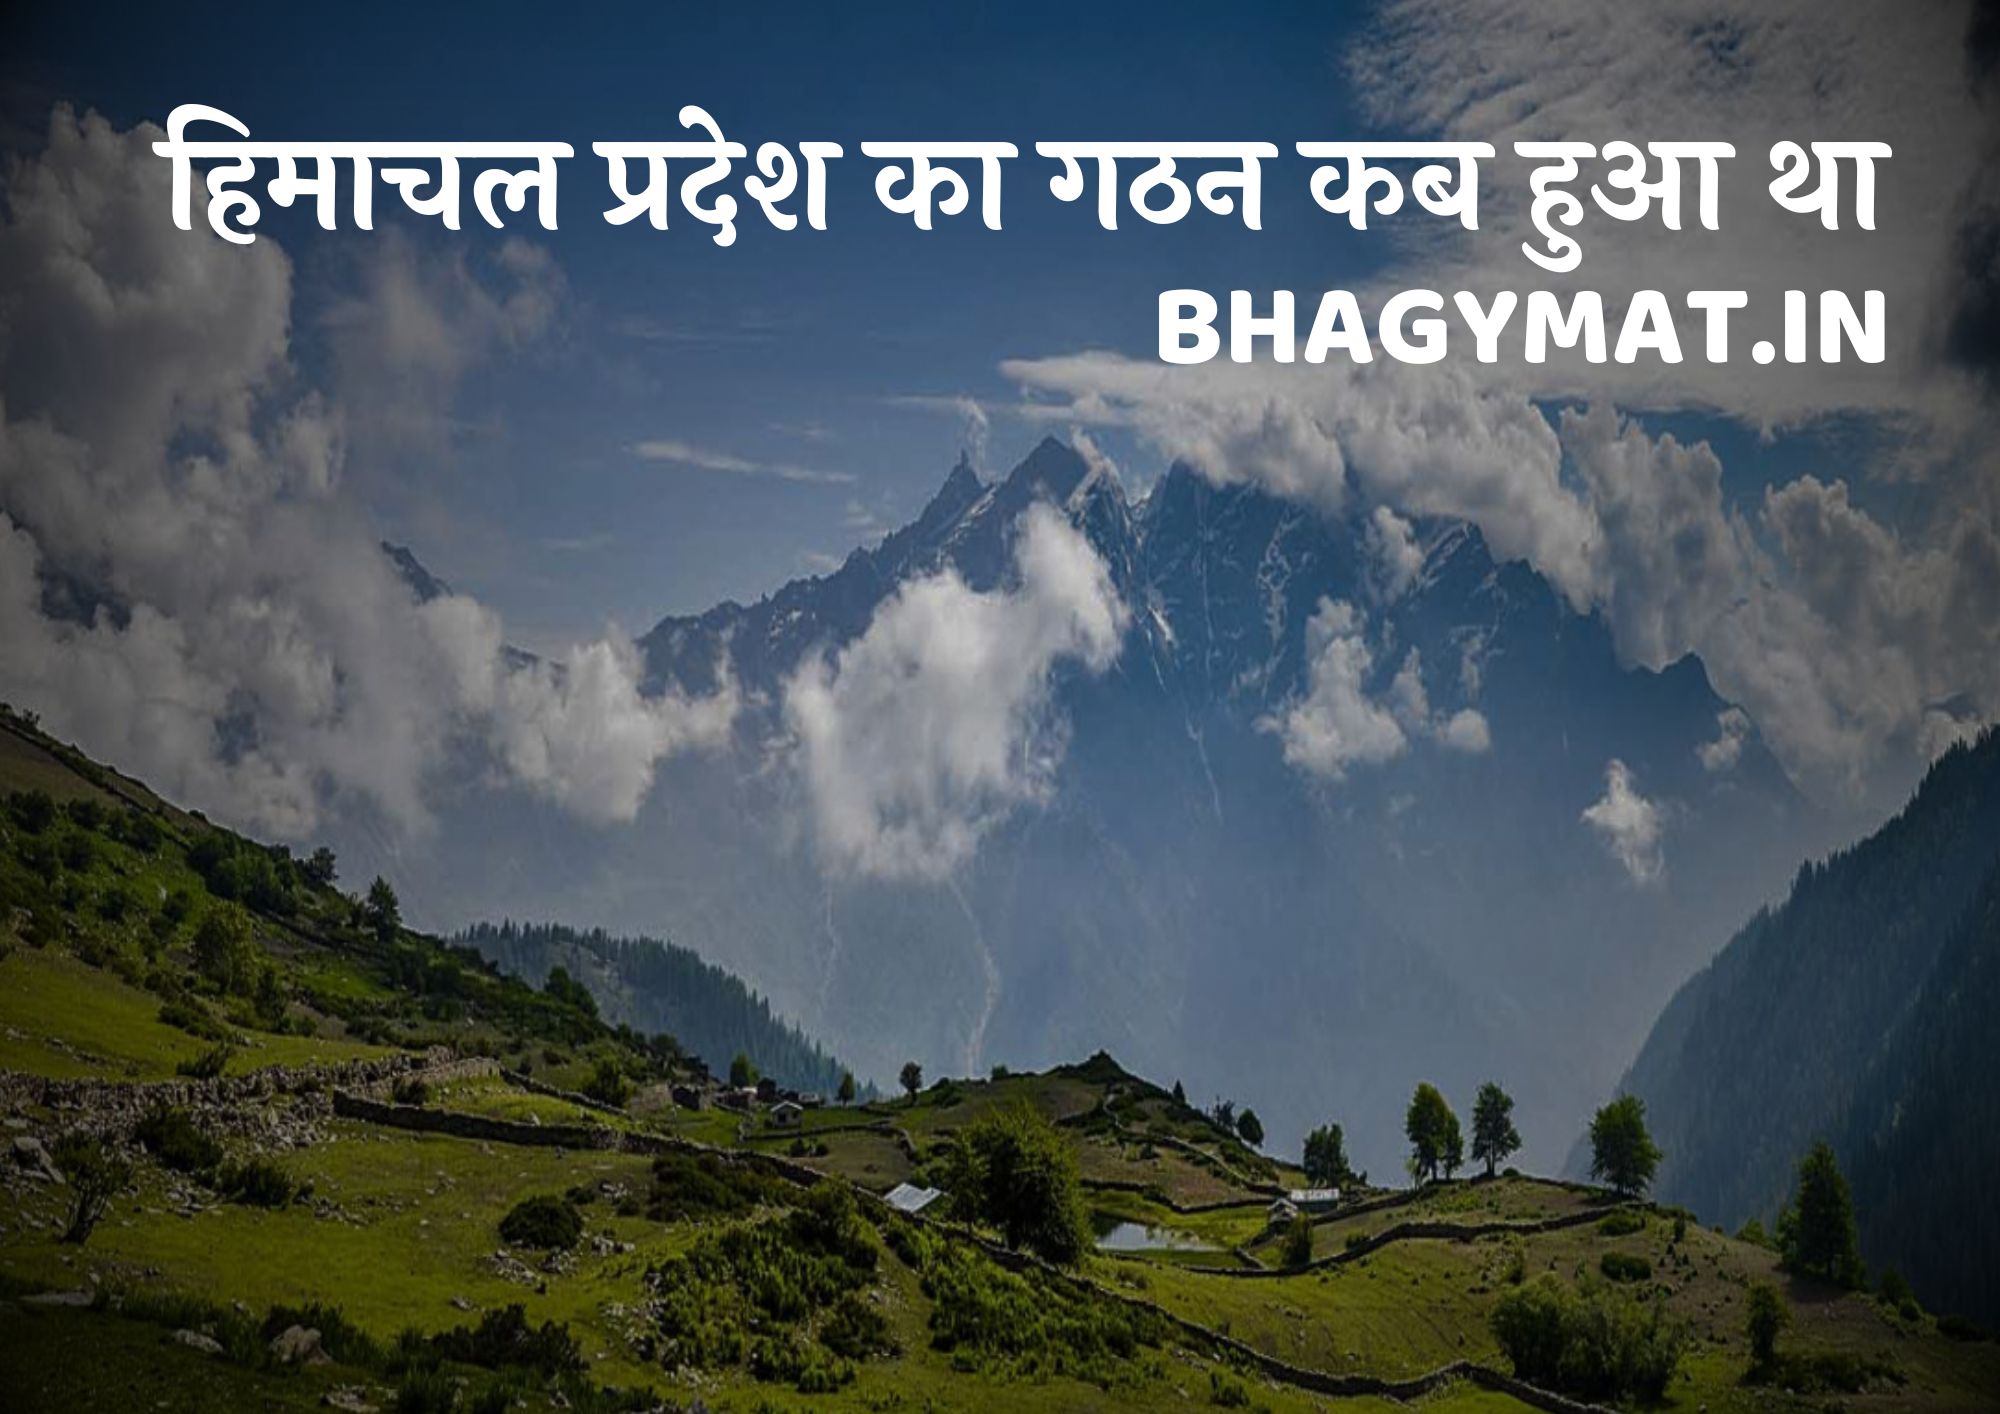 हिमाचल प्रदेश का गठन कब हुआ था, हिमाचल प्रदेश की स्थापना कब हुई थी - Himachal Pradesh In Hindi | Himachal Pradesh Ka Gathan Kab Hua Tha